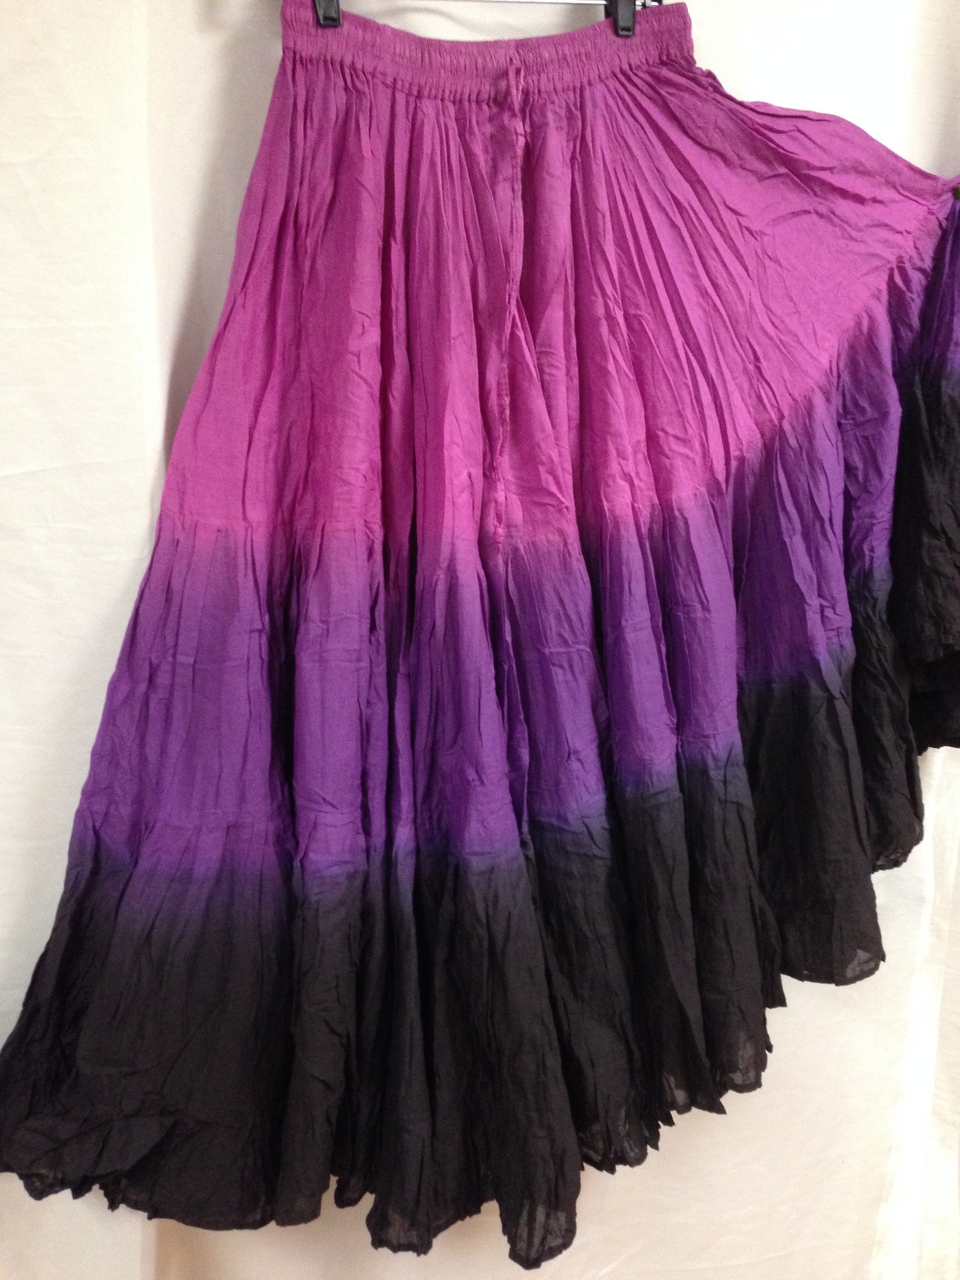 DIP DYE 25 Yard Skirt lavender purple black - Magical Fashions